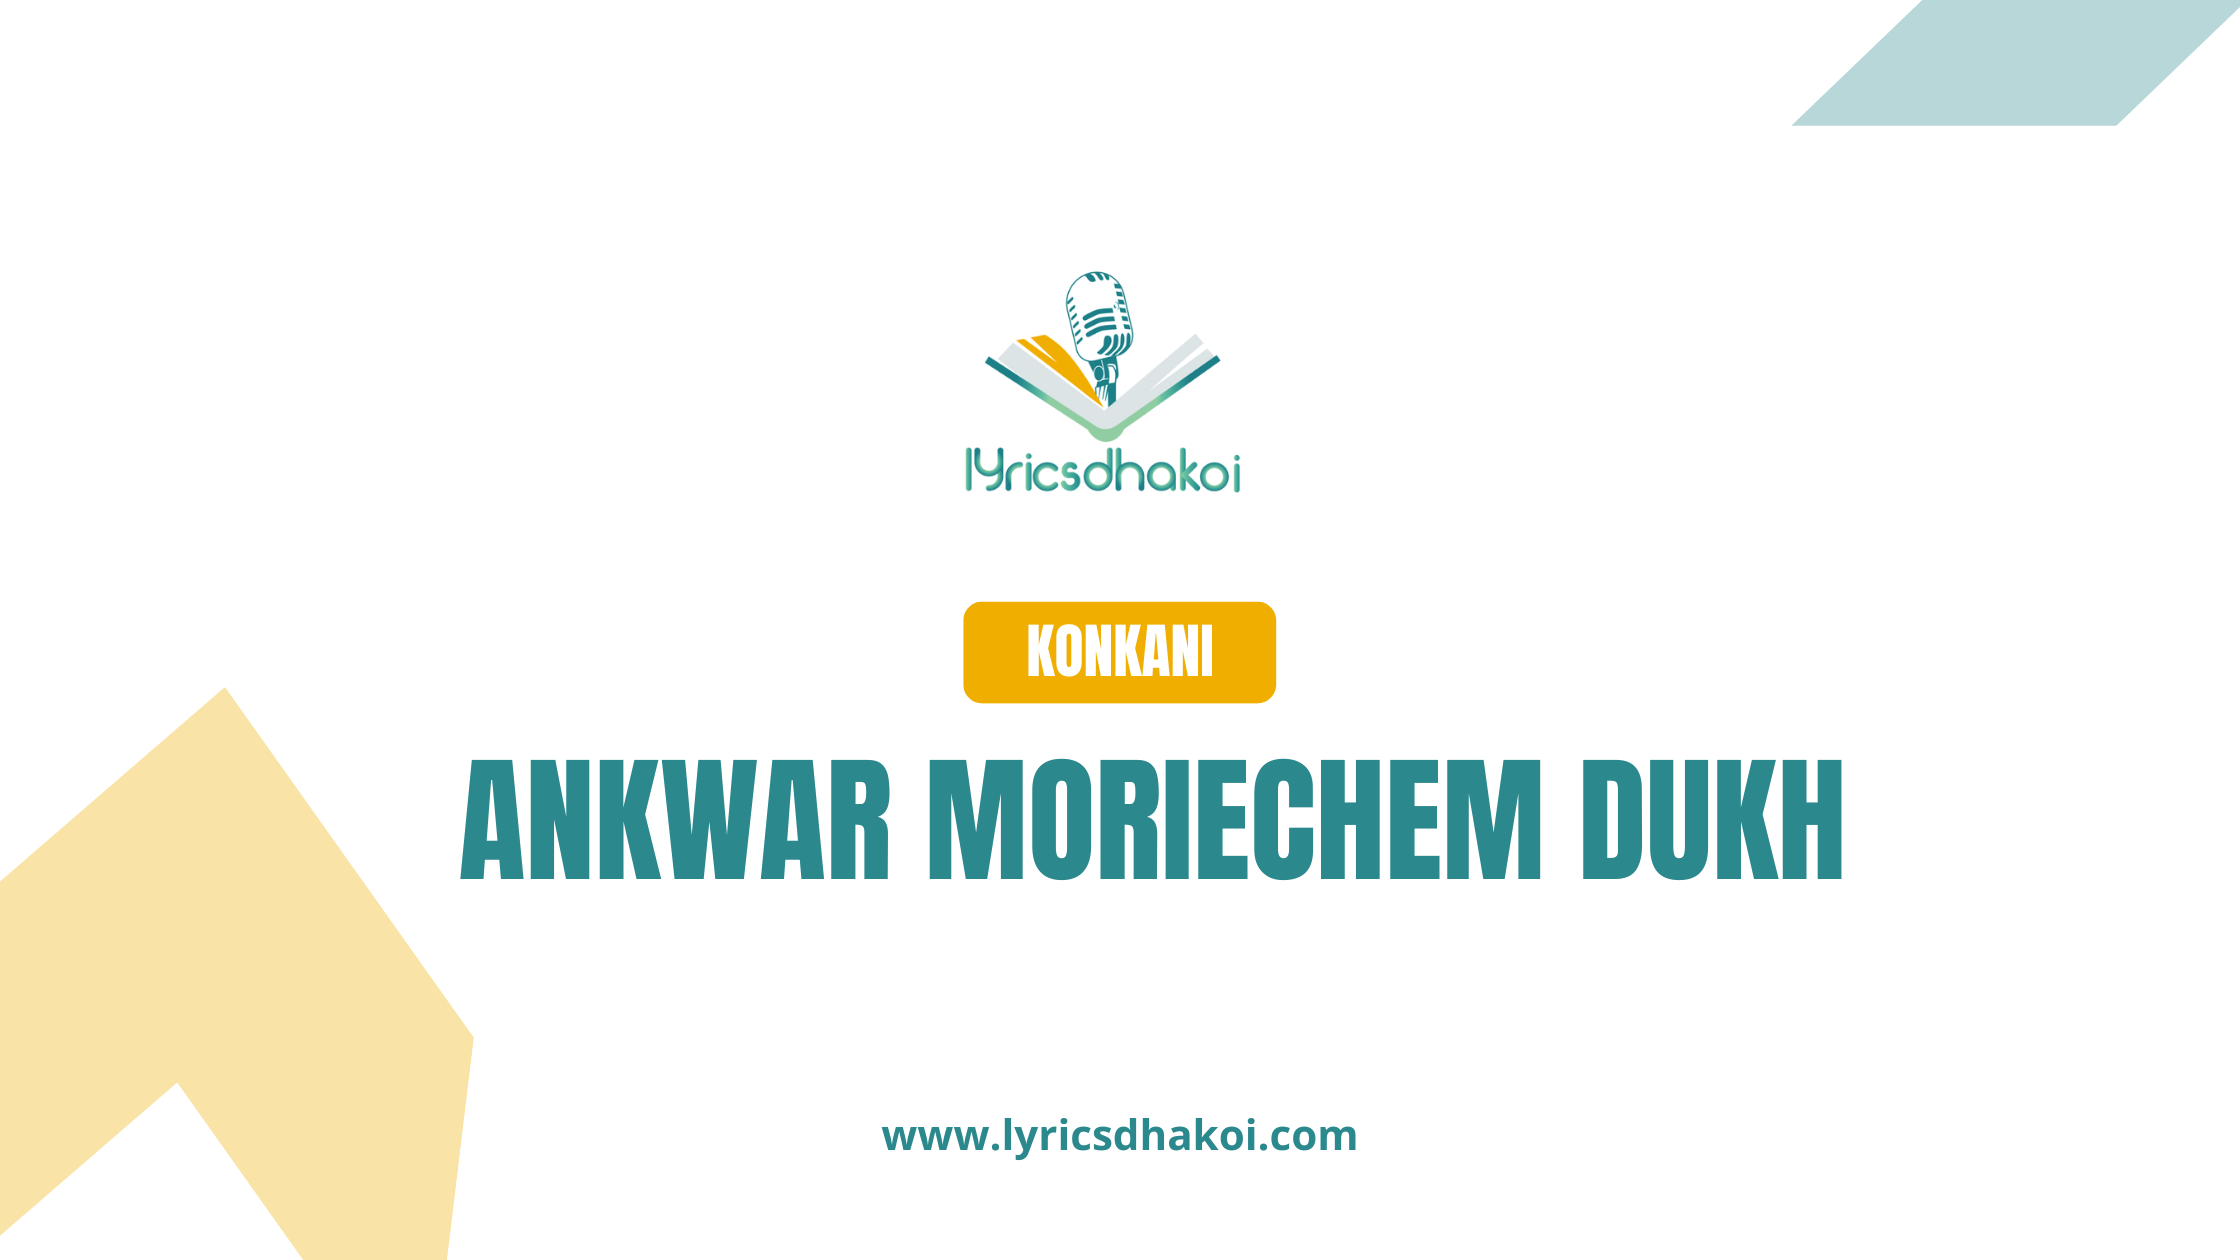 Ankwar Moriechem Dukh Konkani Lyrics for Karaoke Online - LyricsDhakoi.com